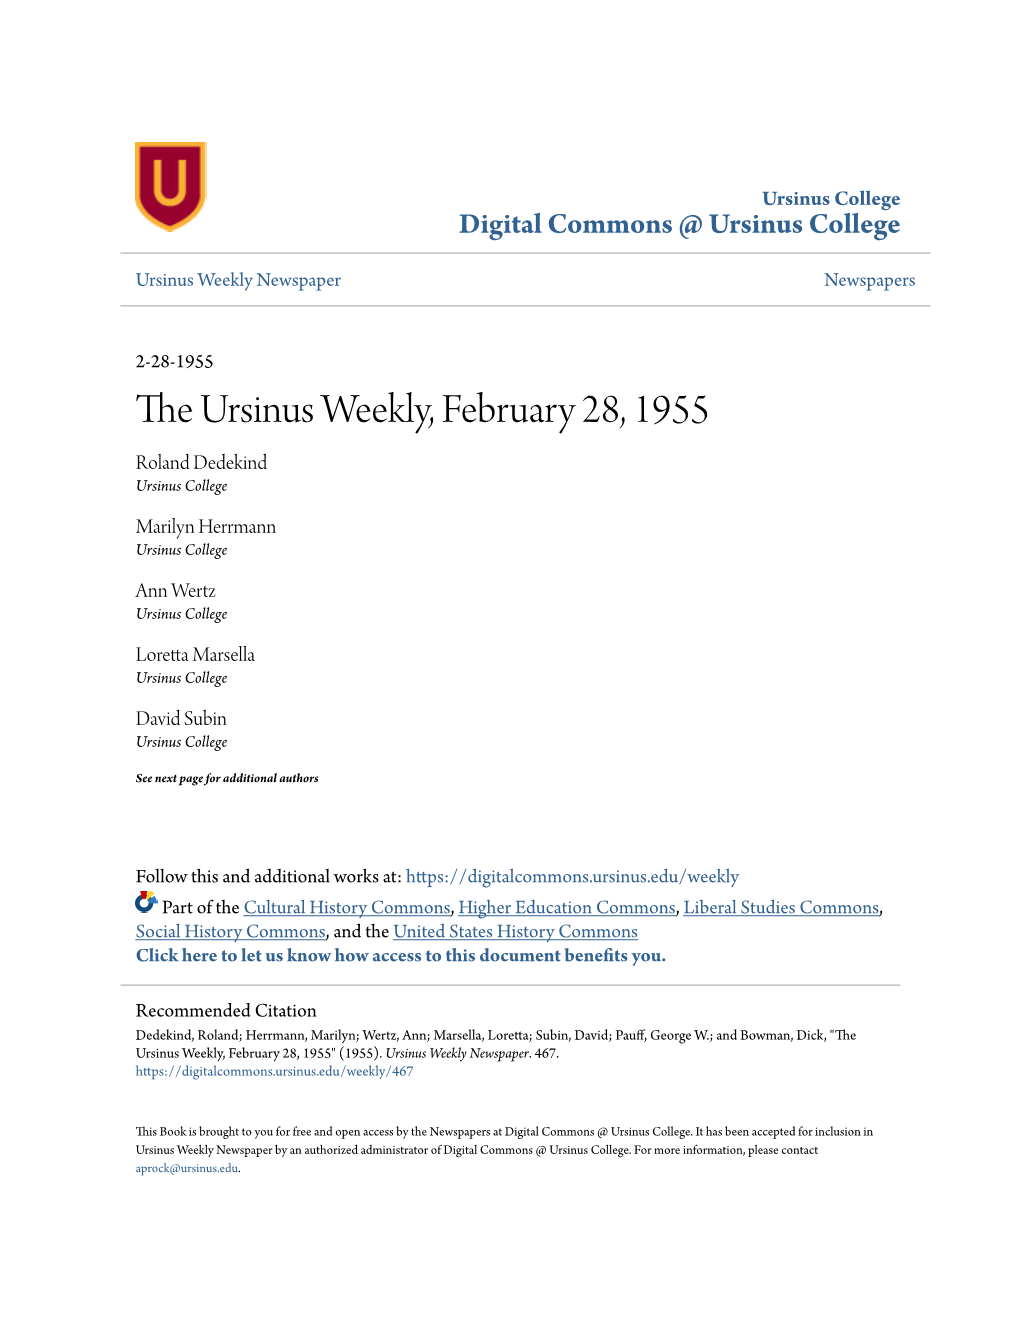 The Ursinus Weekly, February 28, 1955" (1955)